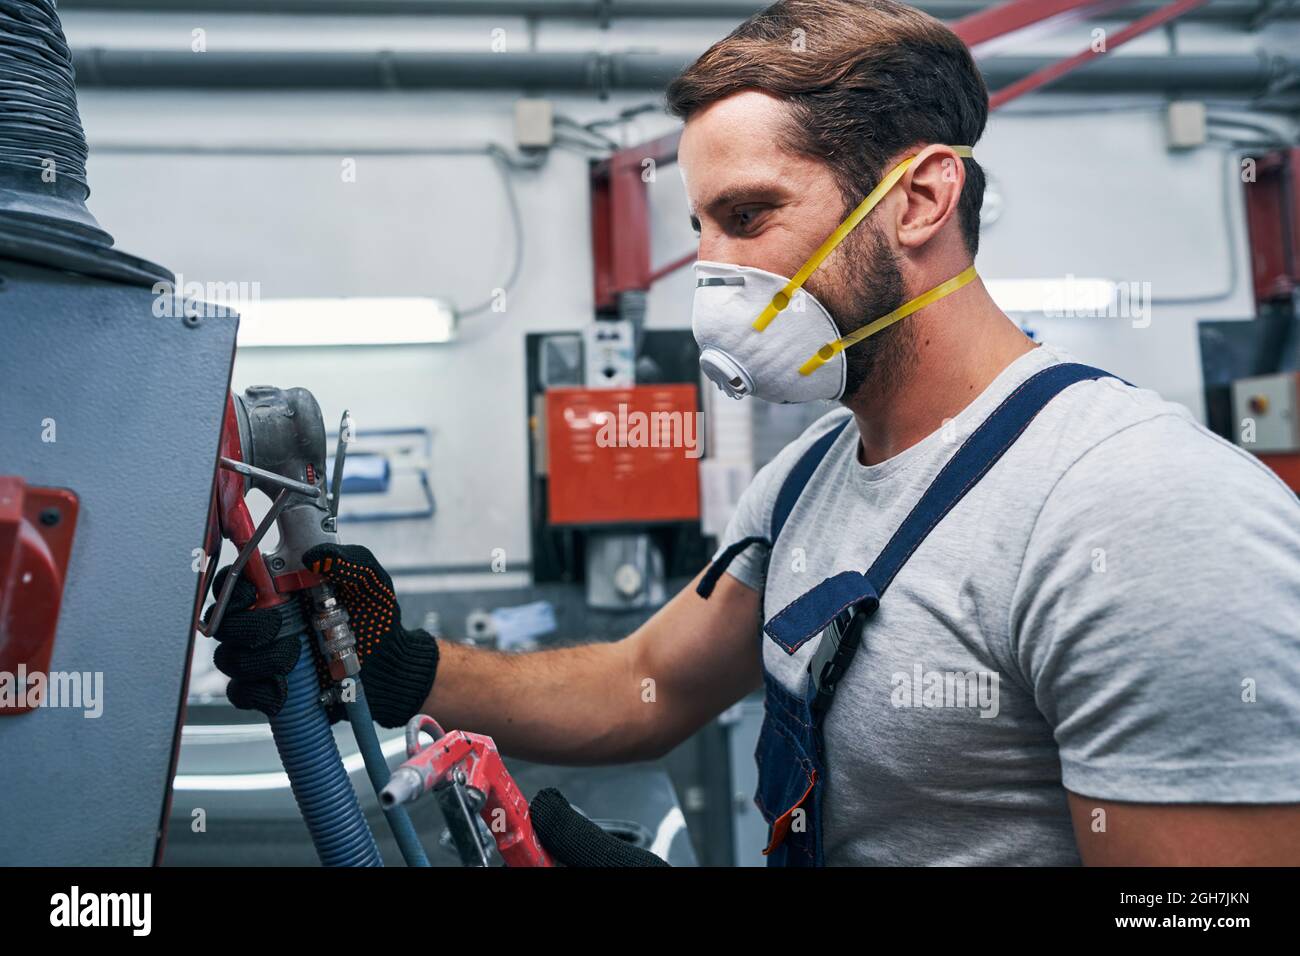 Repairman taking sander tool from air compressor unit Stock Photo